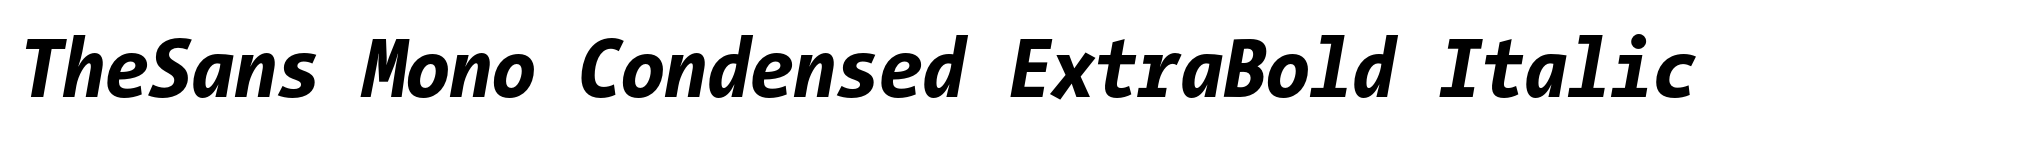 TheSans Mono Condensed ExtraBold Italic image